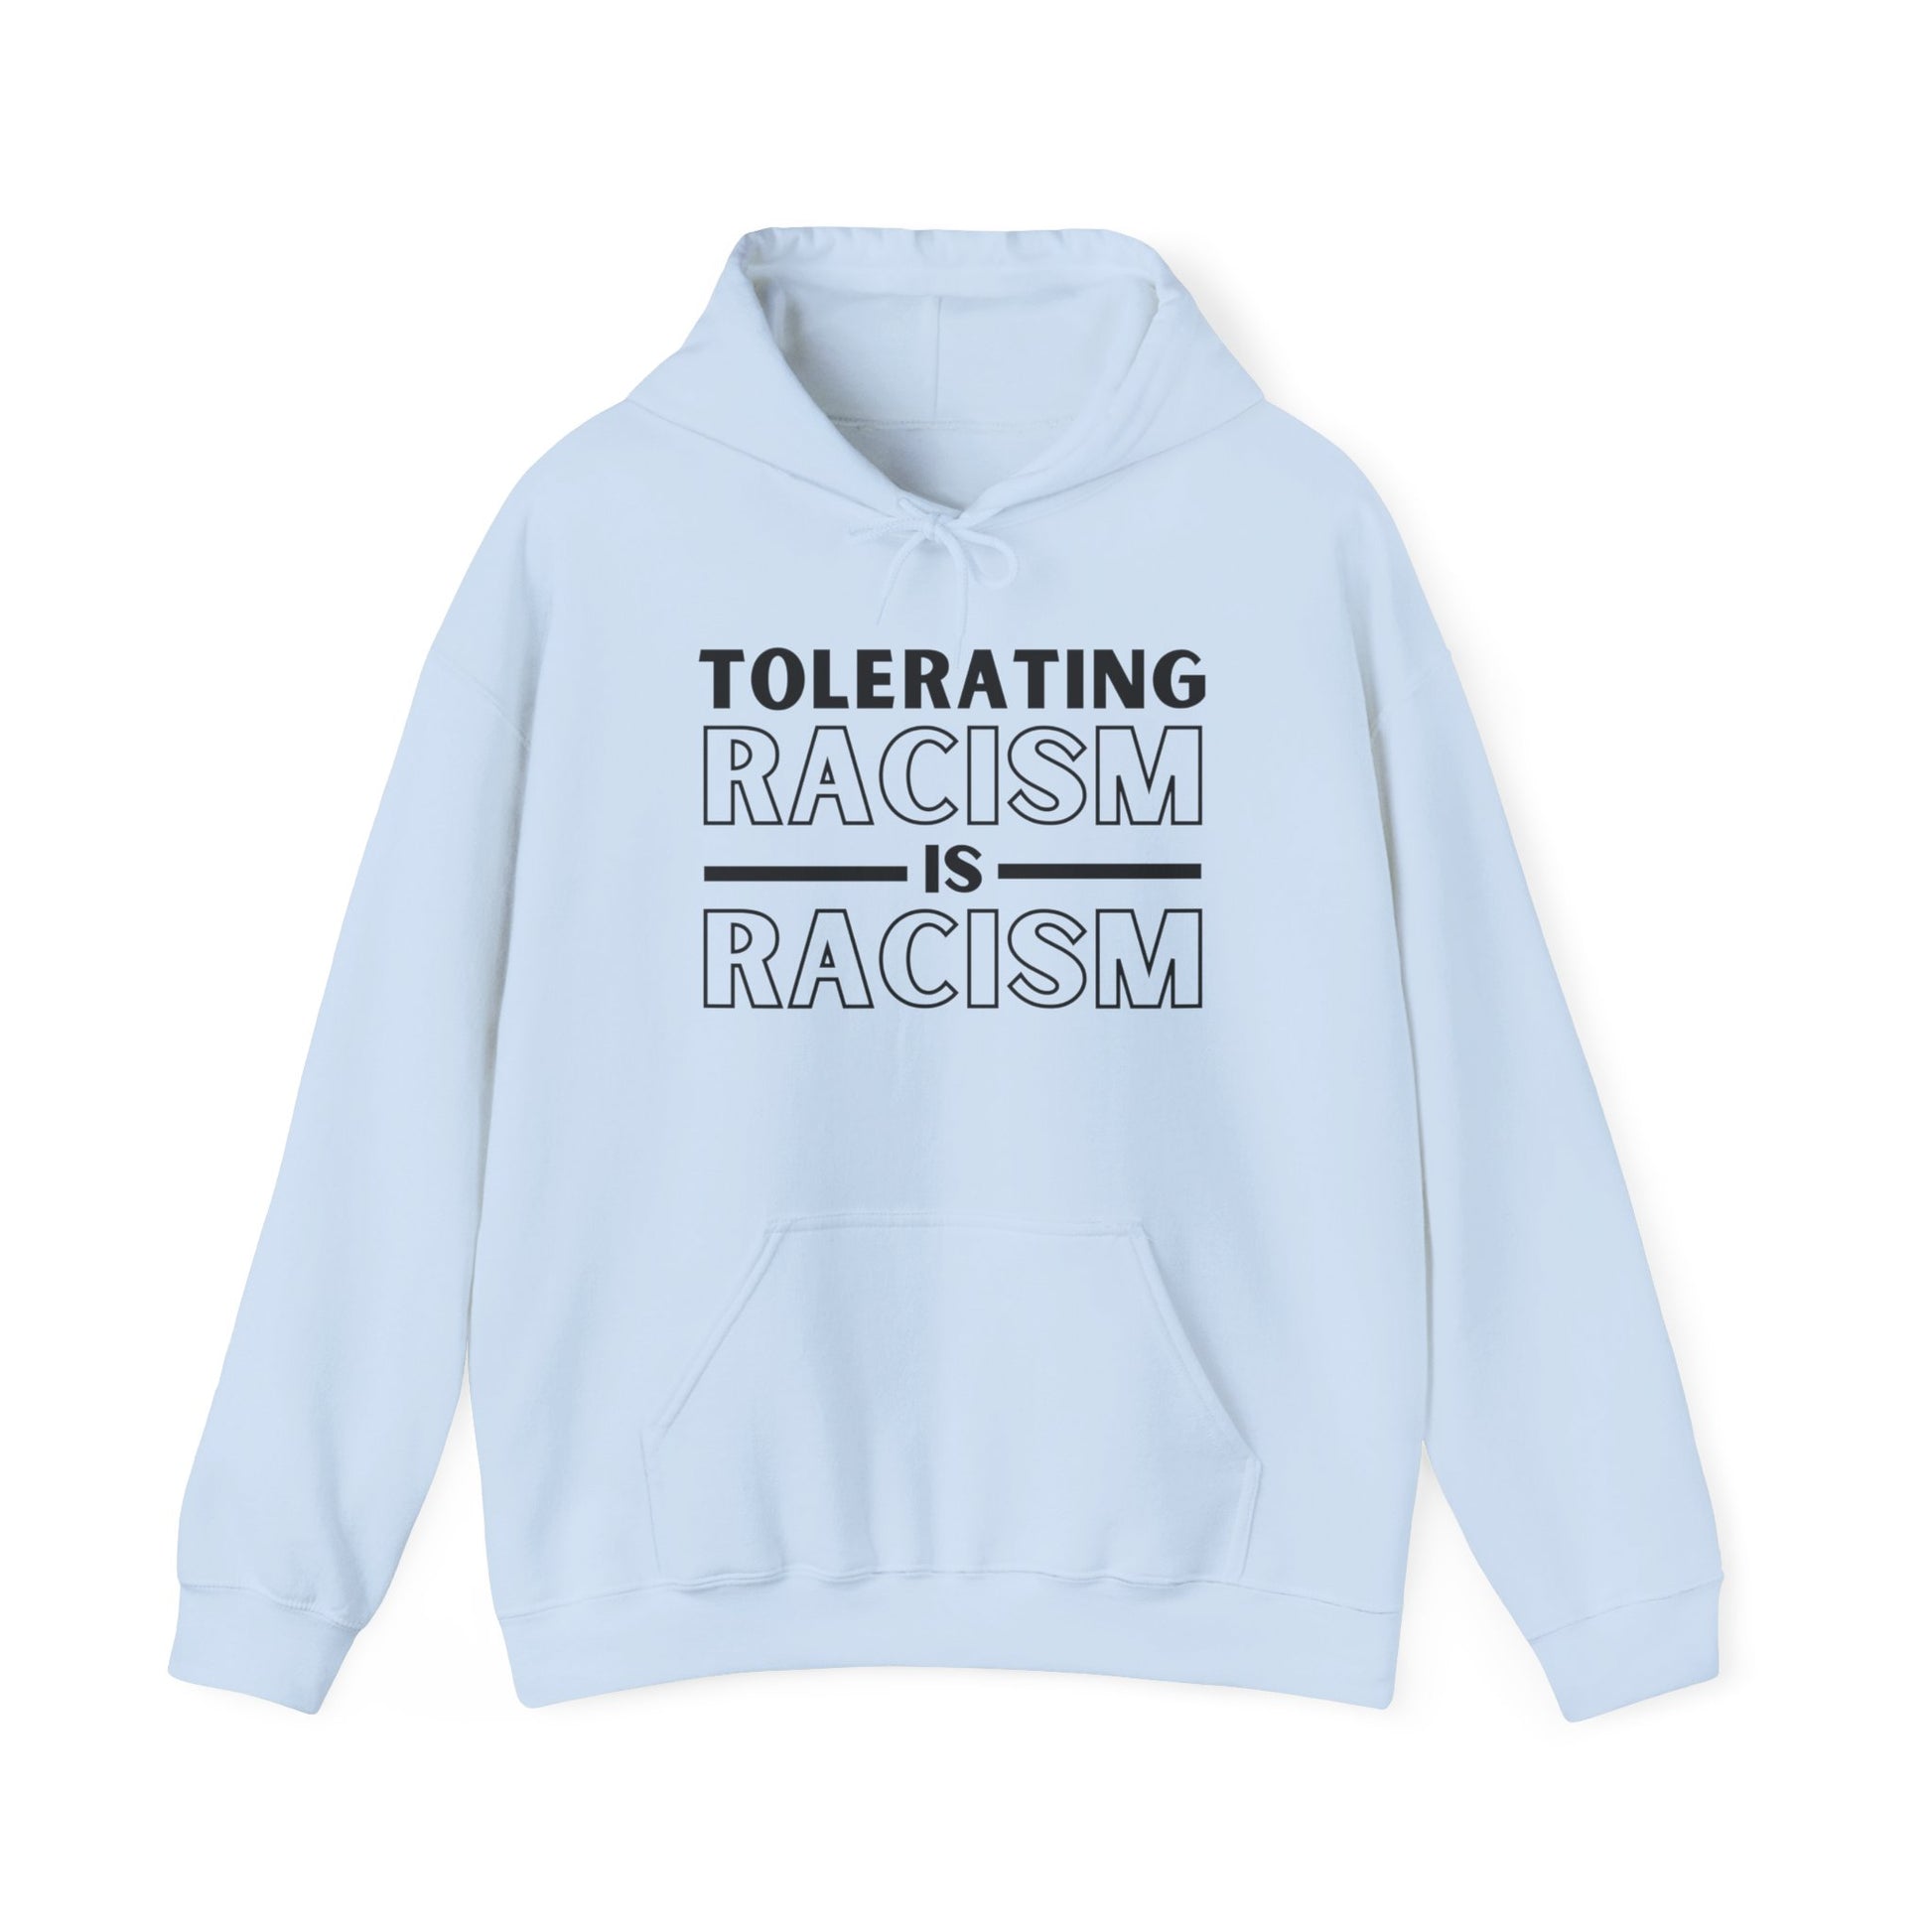 Anti-racism light blue Gildan 18500 hooded sweatshirt with "Tolerating Racism Is Racism" design.